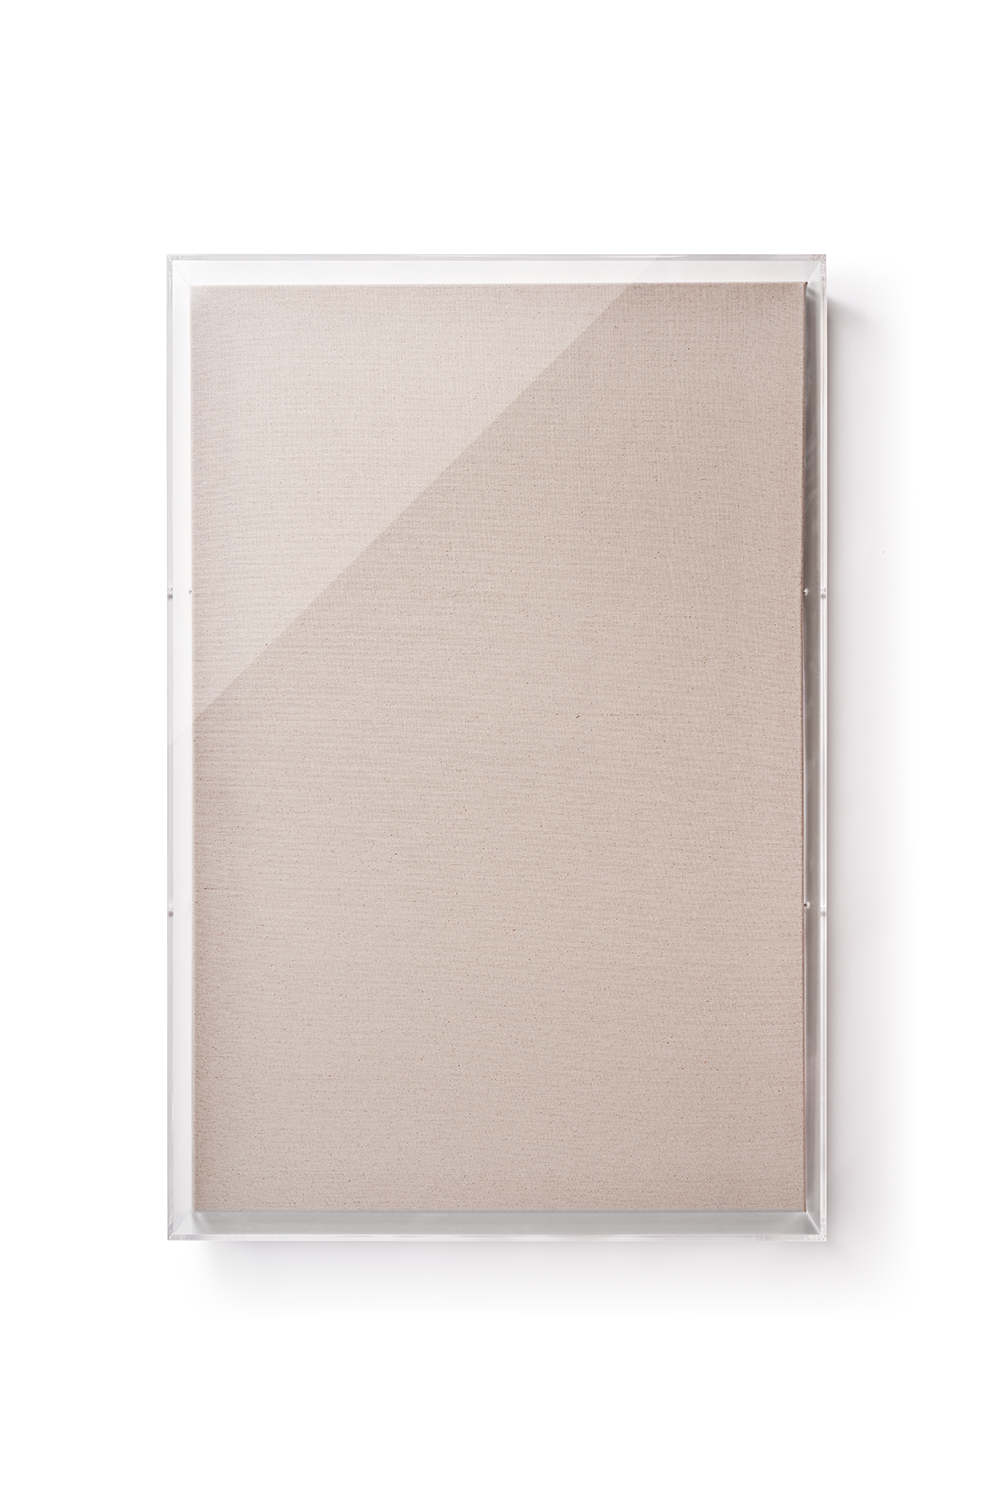 24" x 36" x 3" Modern Acrylic Shadowbox with Linen Canvas - UV Grade